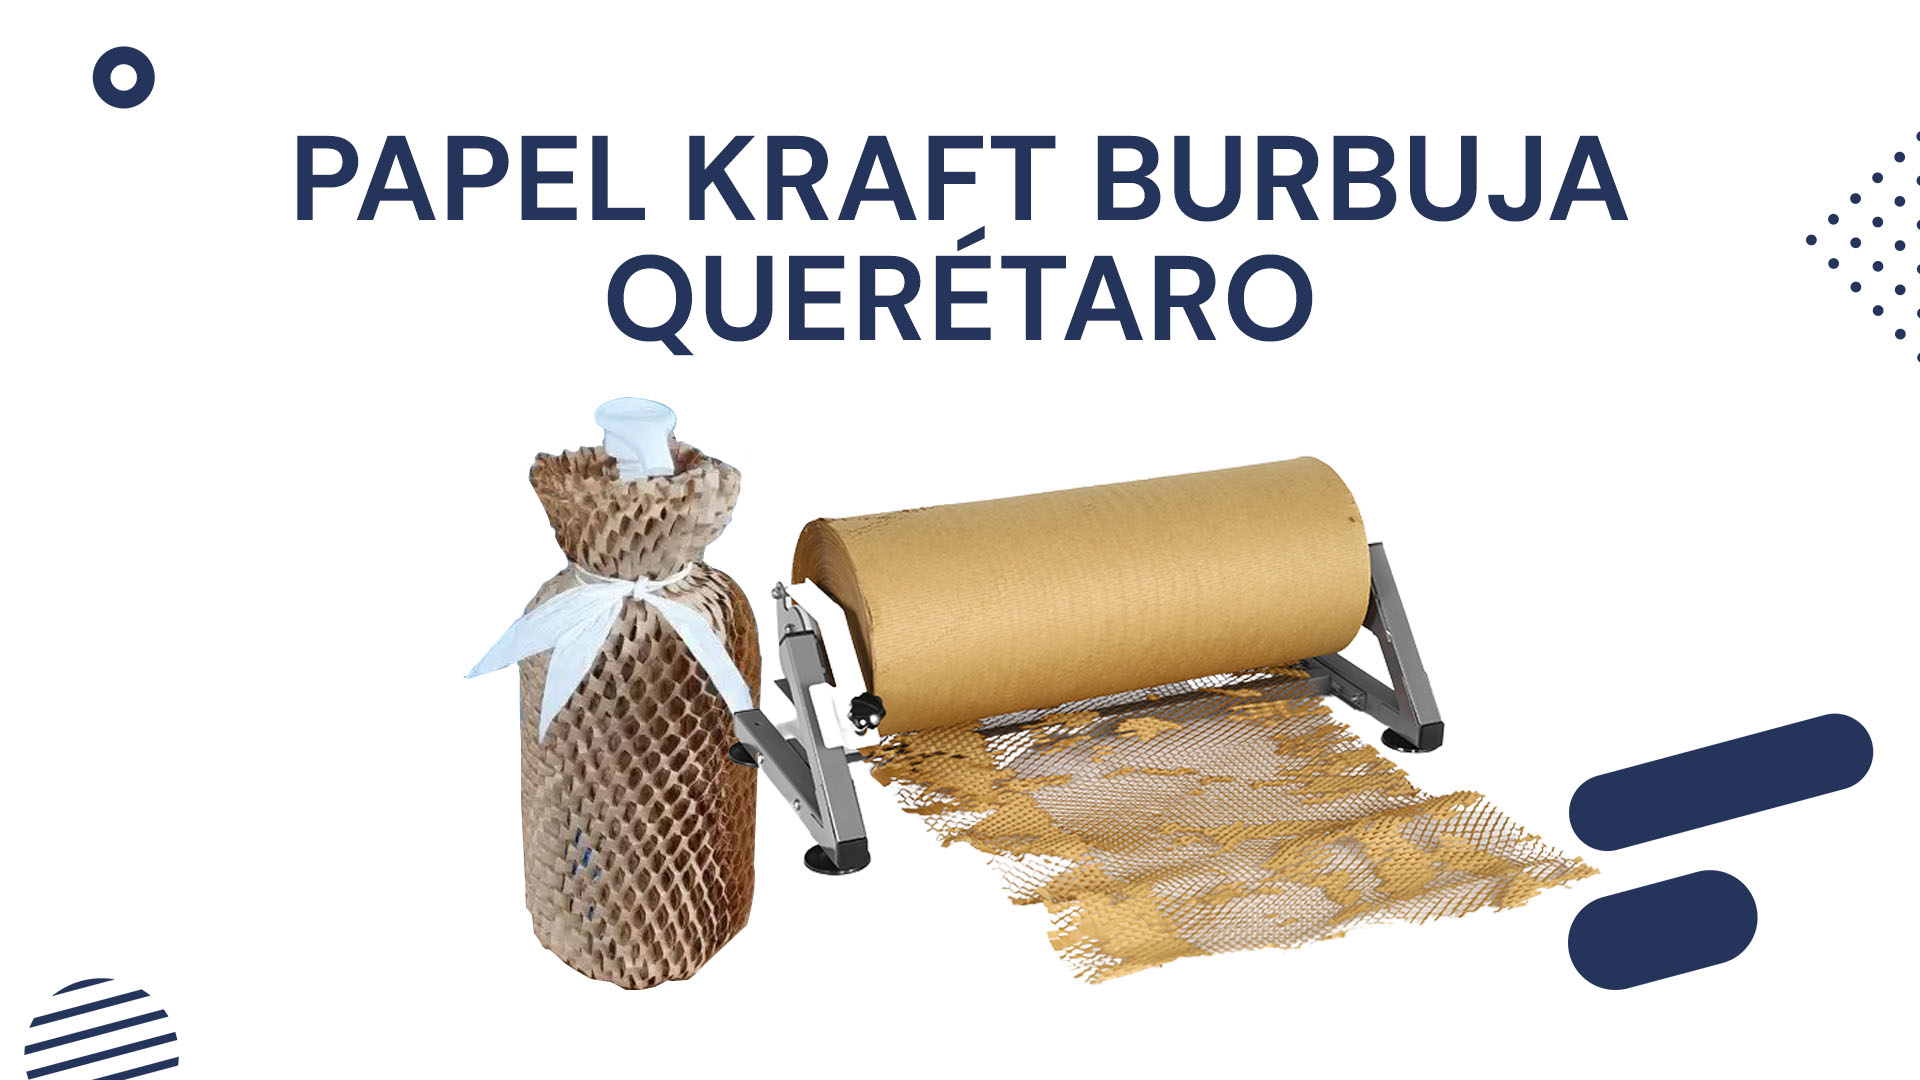 Papel Kraft burbuja Querétaro Papel Kraft burbuja Querétaro razones para usarlo - Boxor